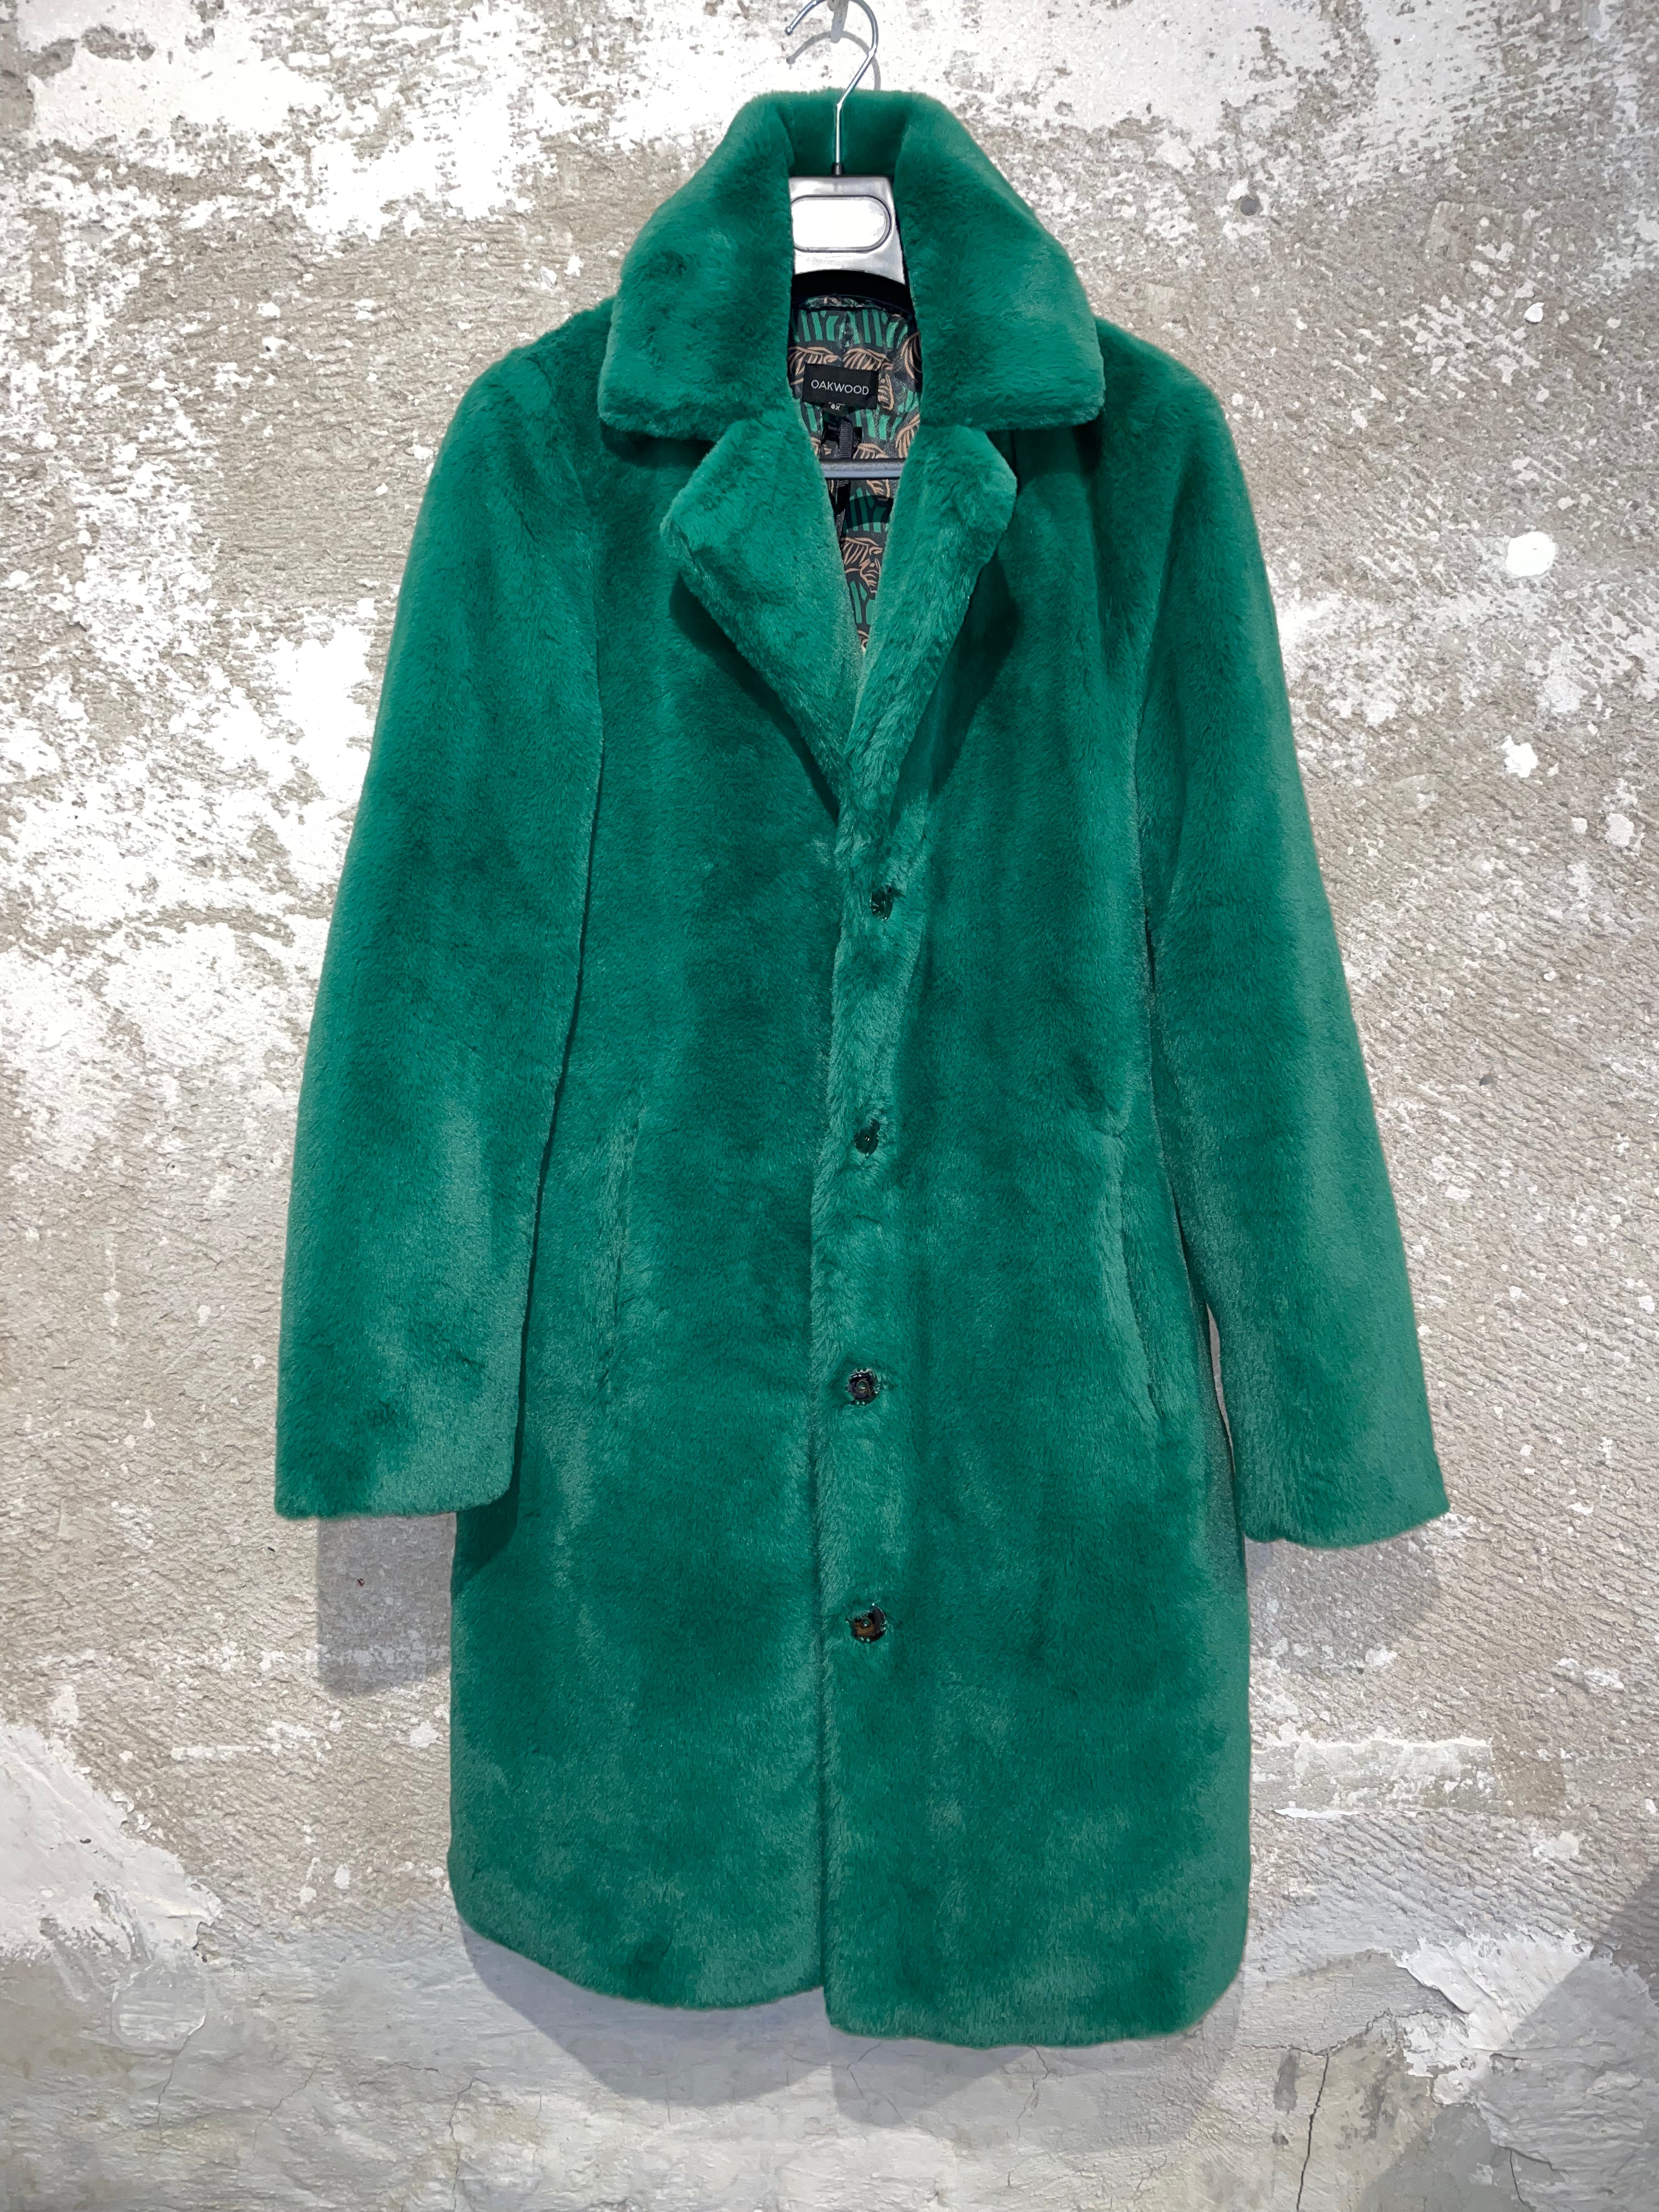 Cyber coat green